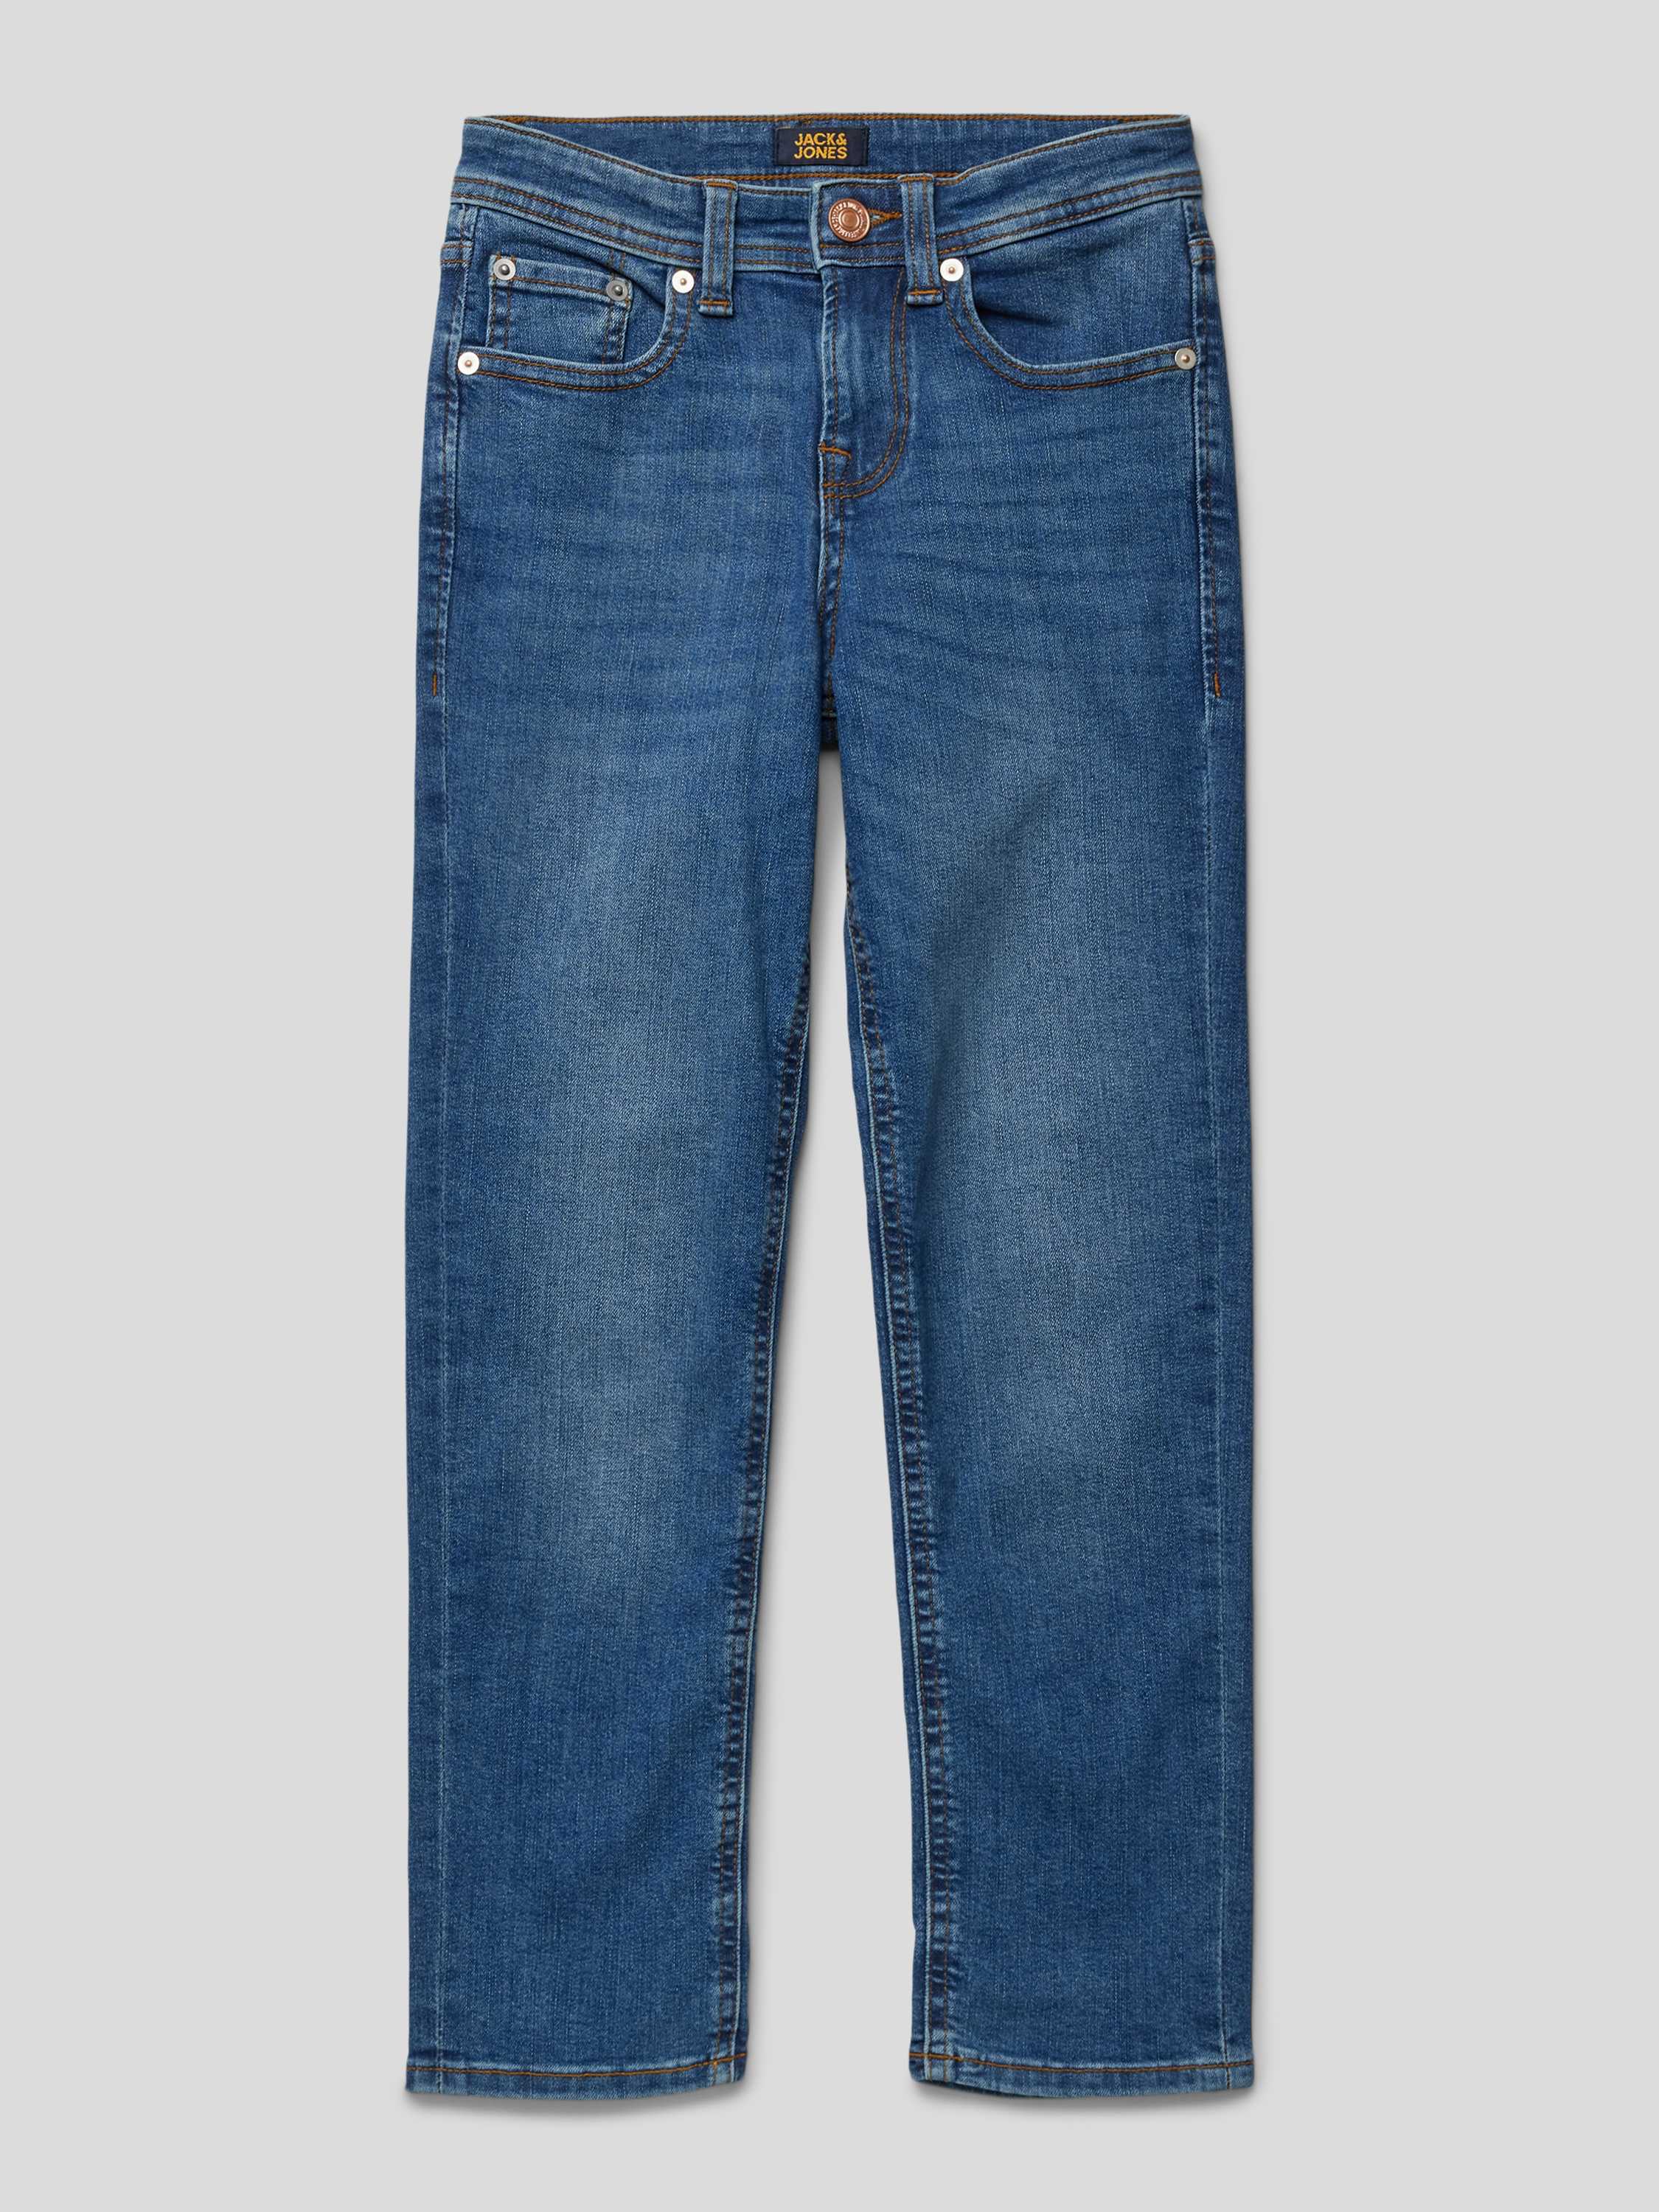 Jack & jones JUNIOR regular jeans JJICLARK medium blue denim Blauw Jongens Stretchdenim 134